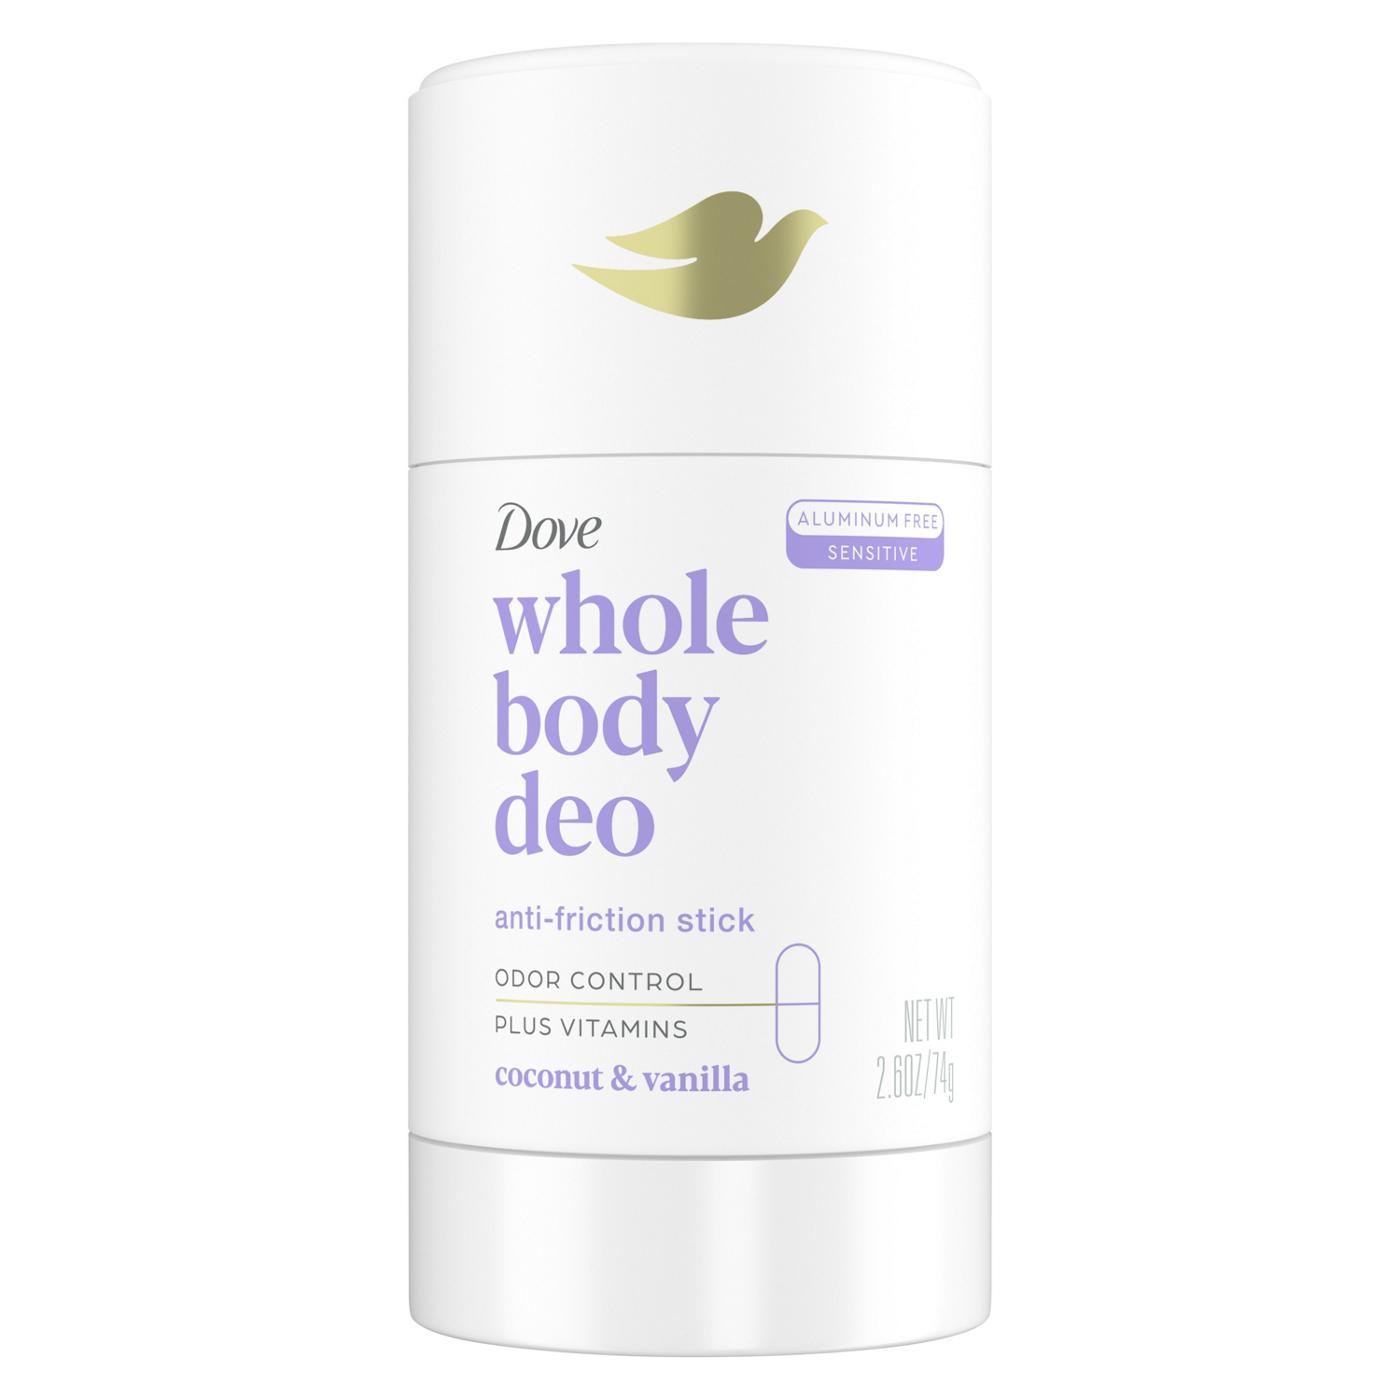 Dove Whole Body Deo Aluminum Free Anti-friction Deodorant Stick Coconut + Vanilla; image 1 of 8